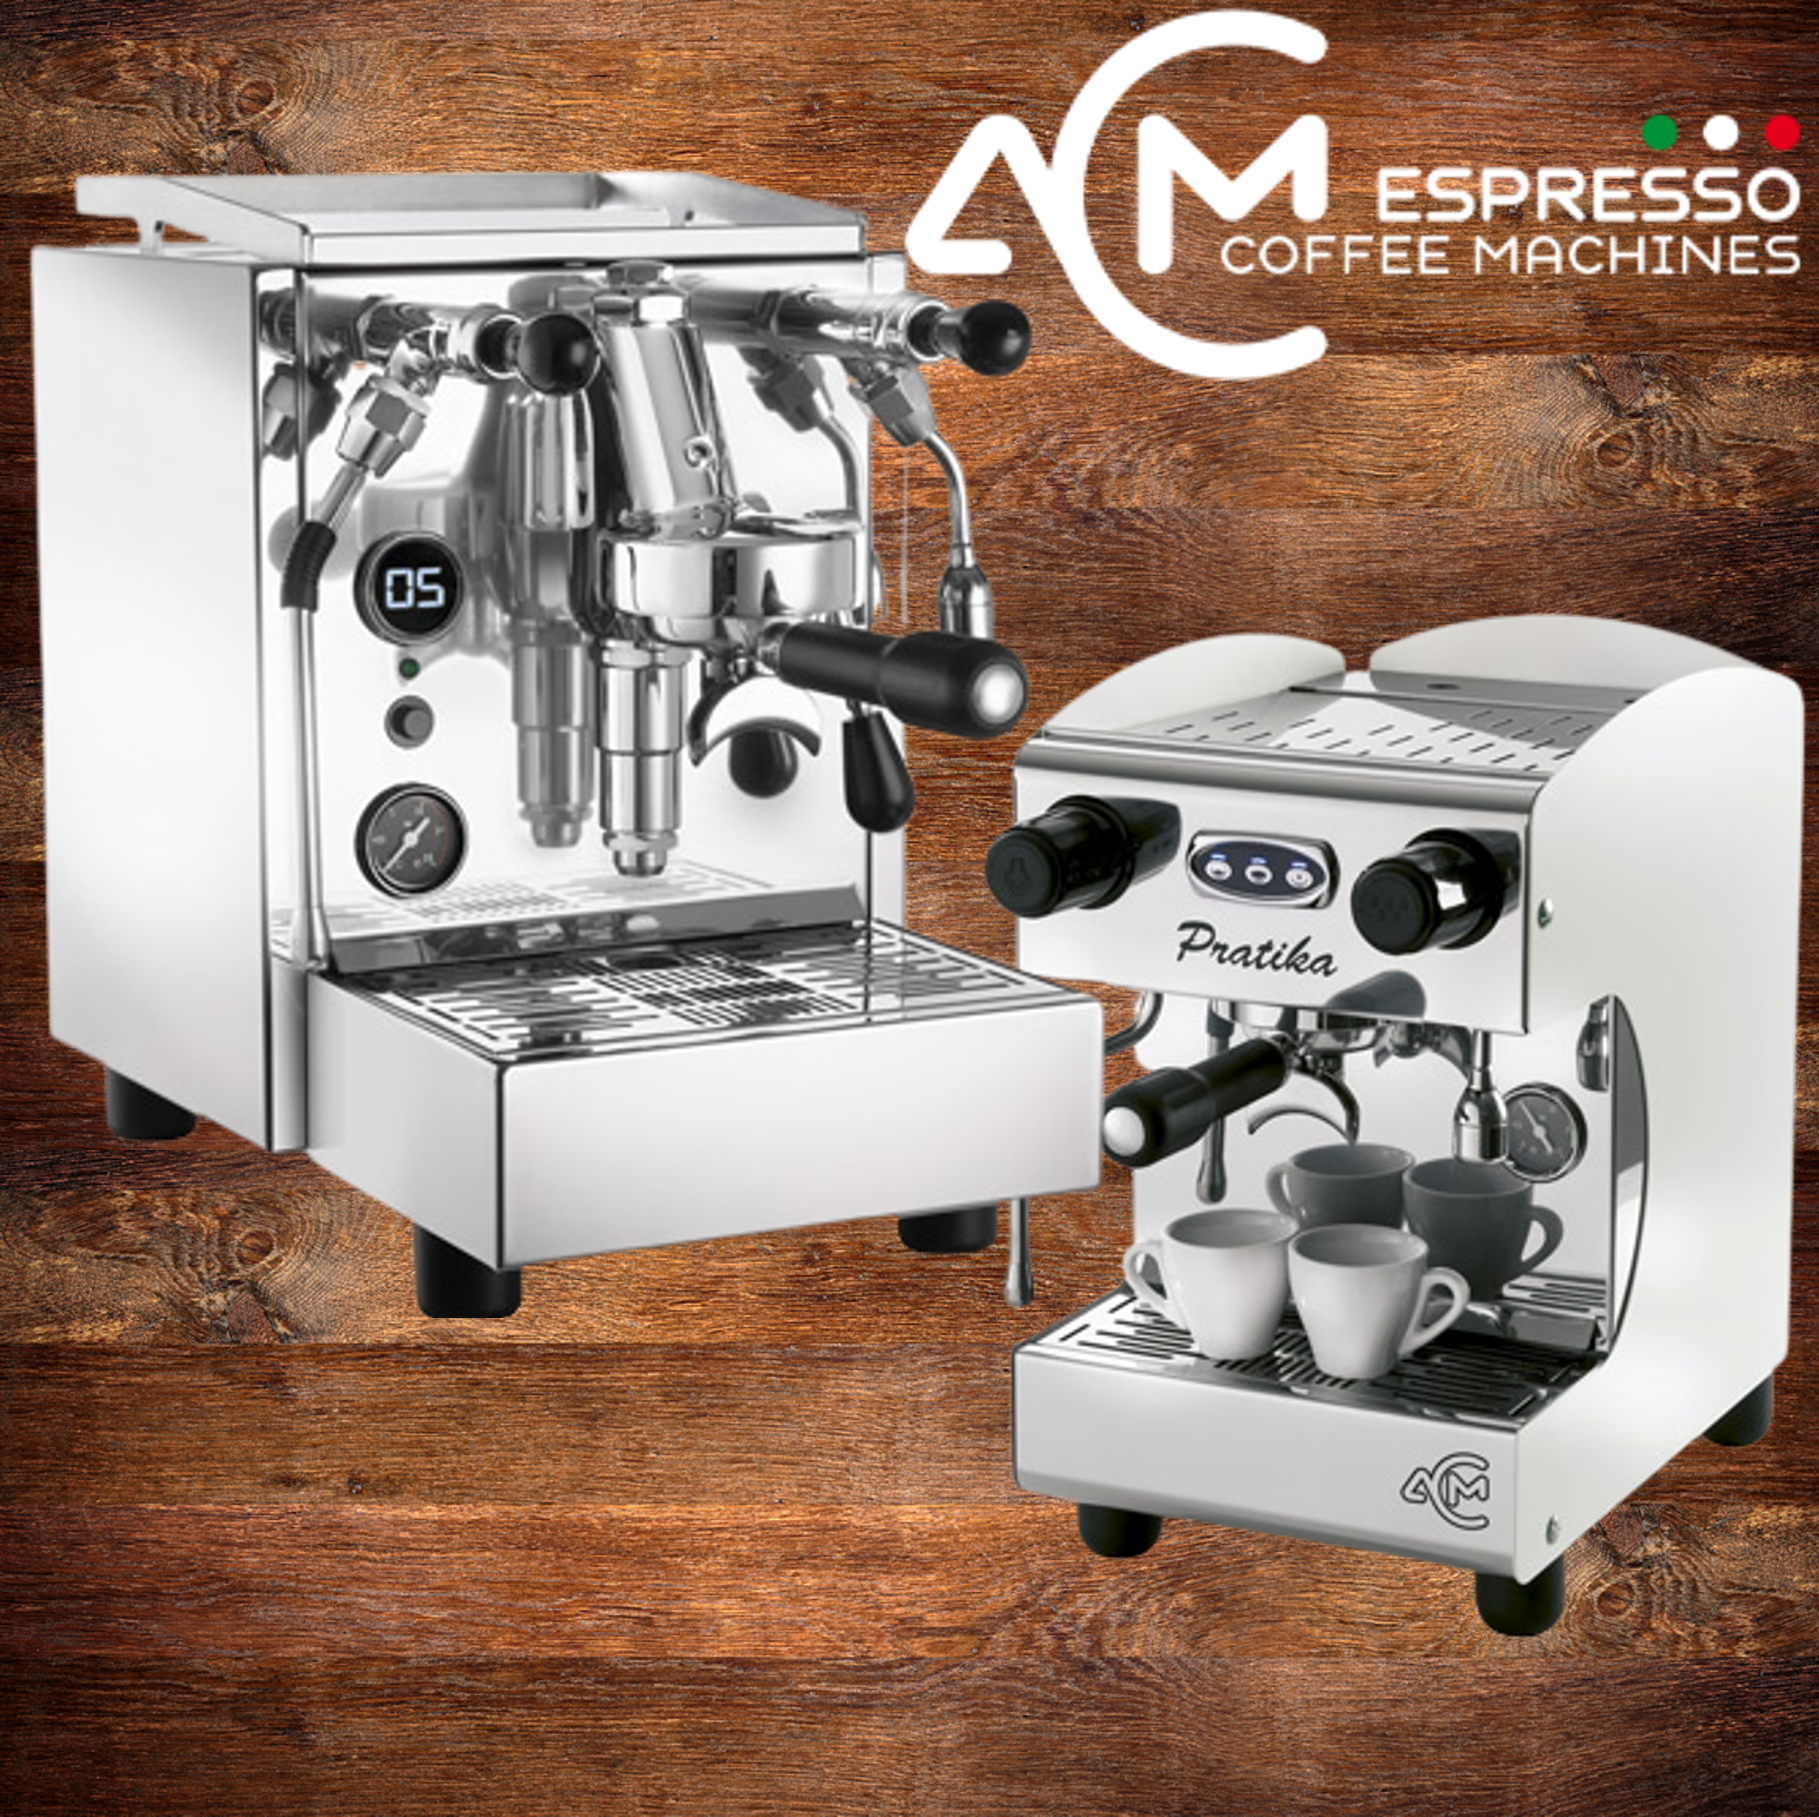 ACM Espresso Coffee Machines